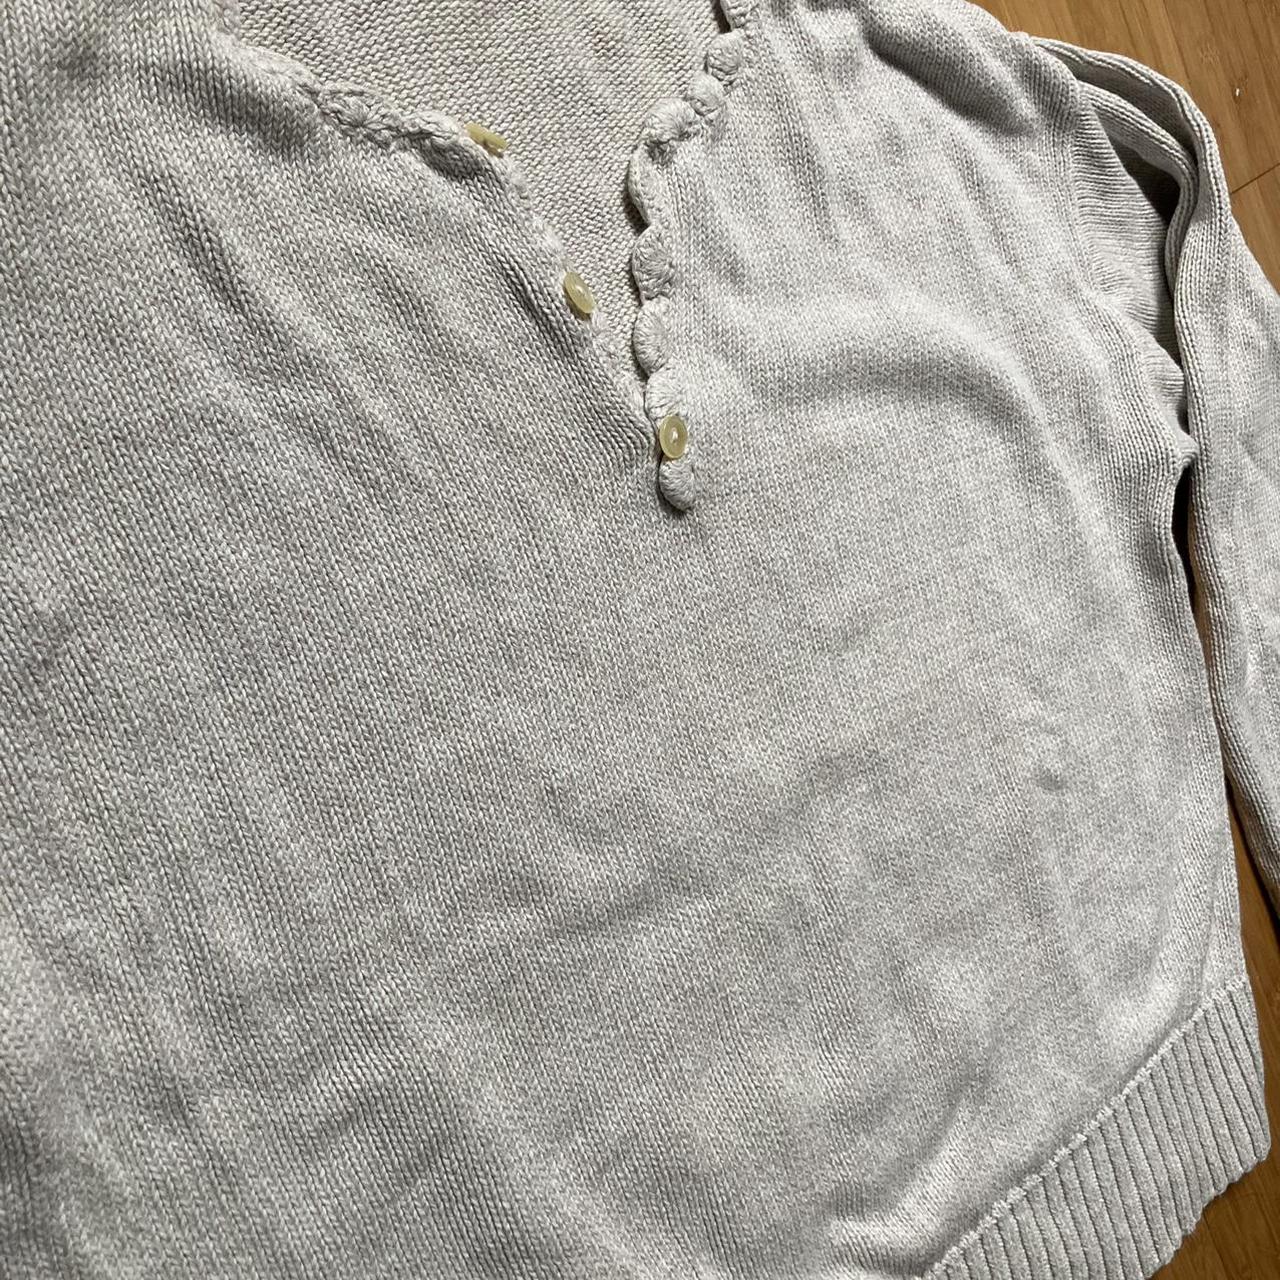 Product Image 3 - Beige sweatshirt with scalloped trim